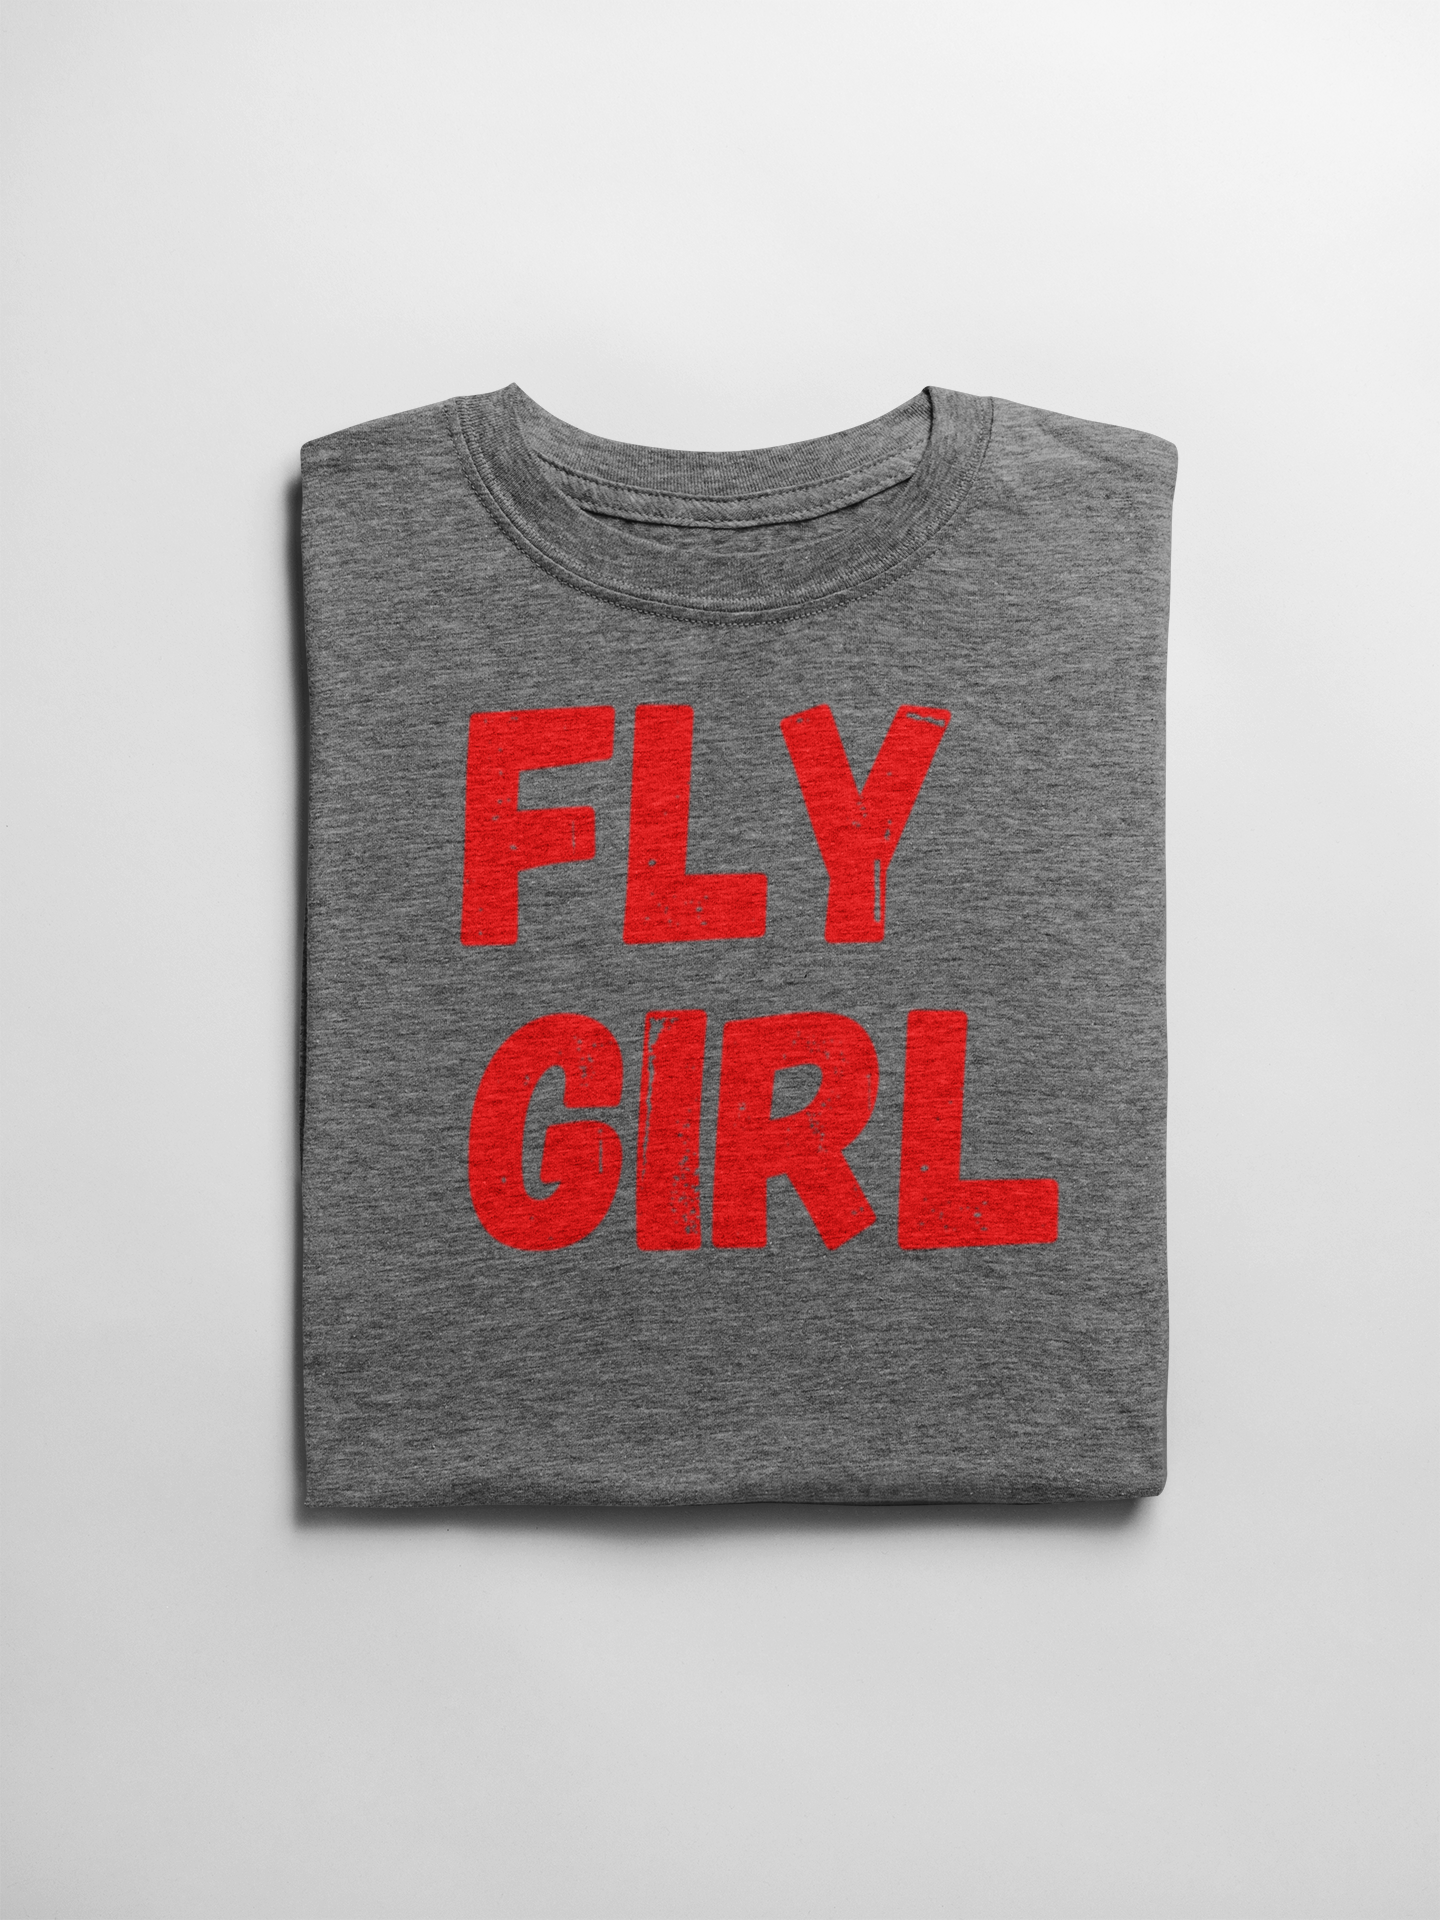 Fly Girl Tee